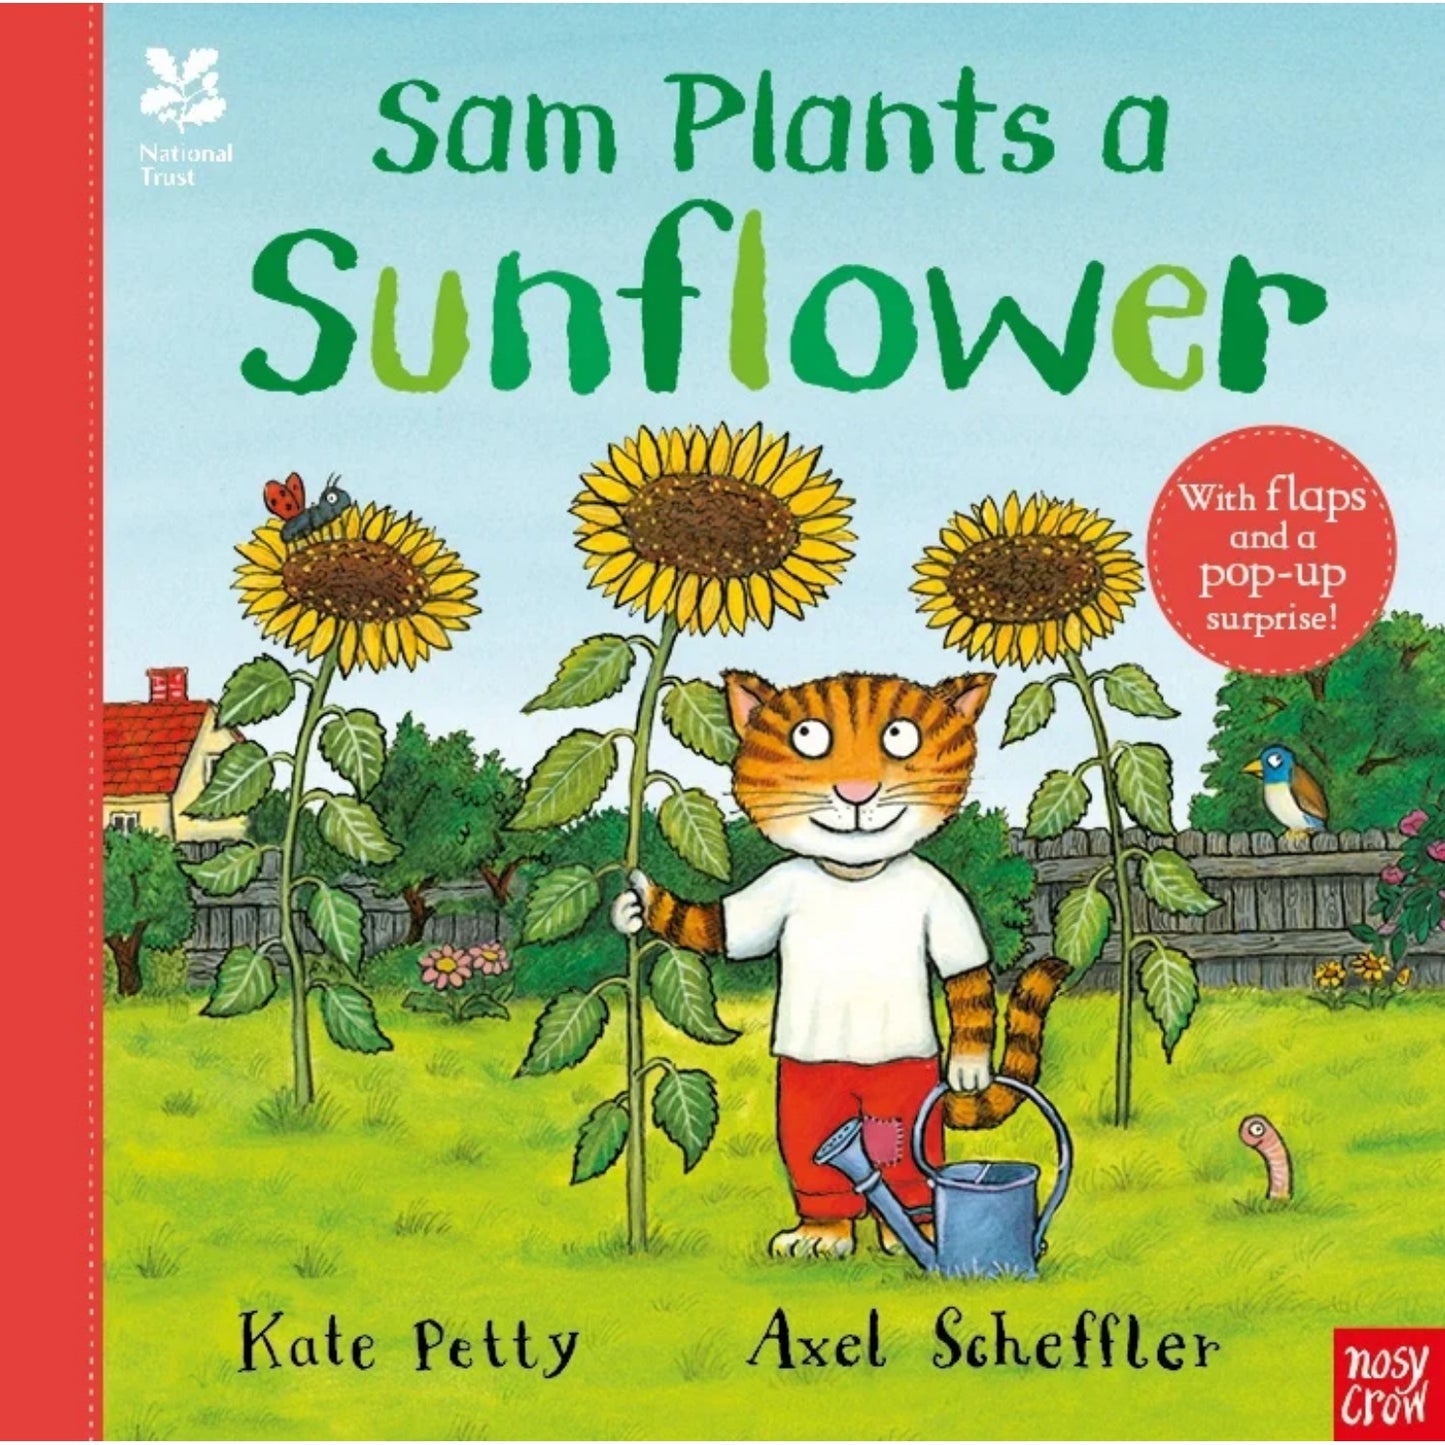 Sam Plants a Sunflower | Hardcover | Children’s Book on Nature